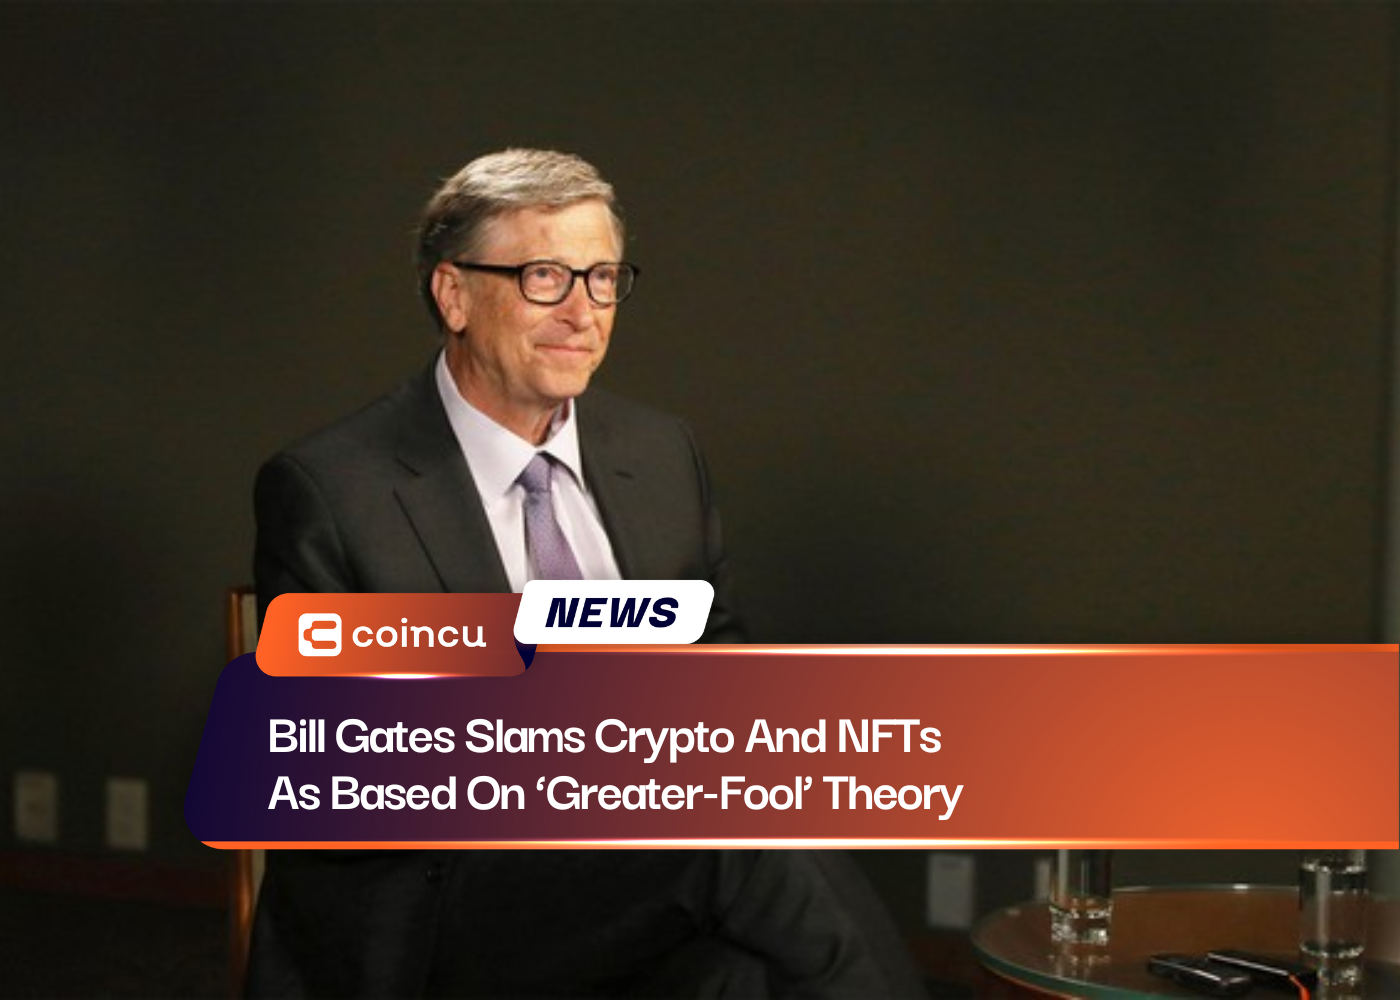 Bill Gates critica criptografia e NFTs com base na teoria do “maior tolo”